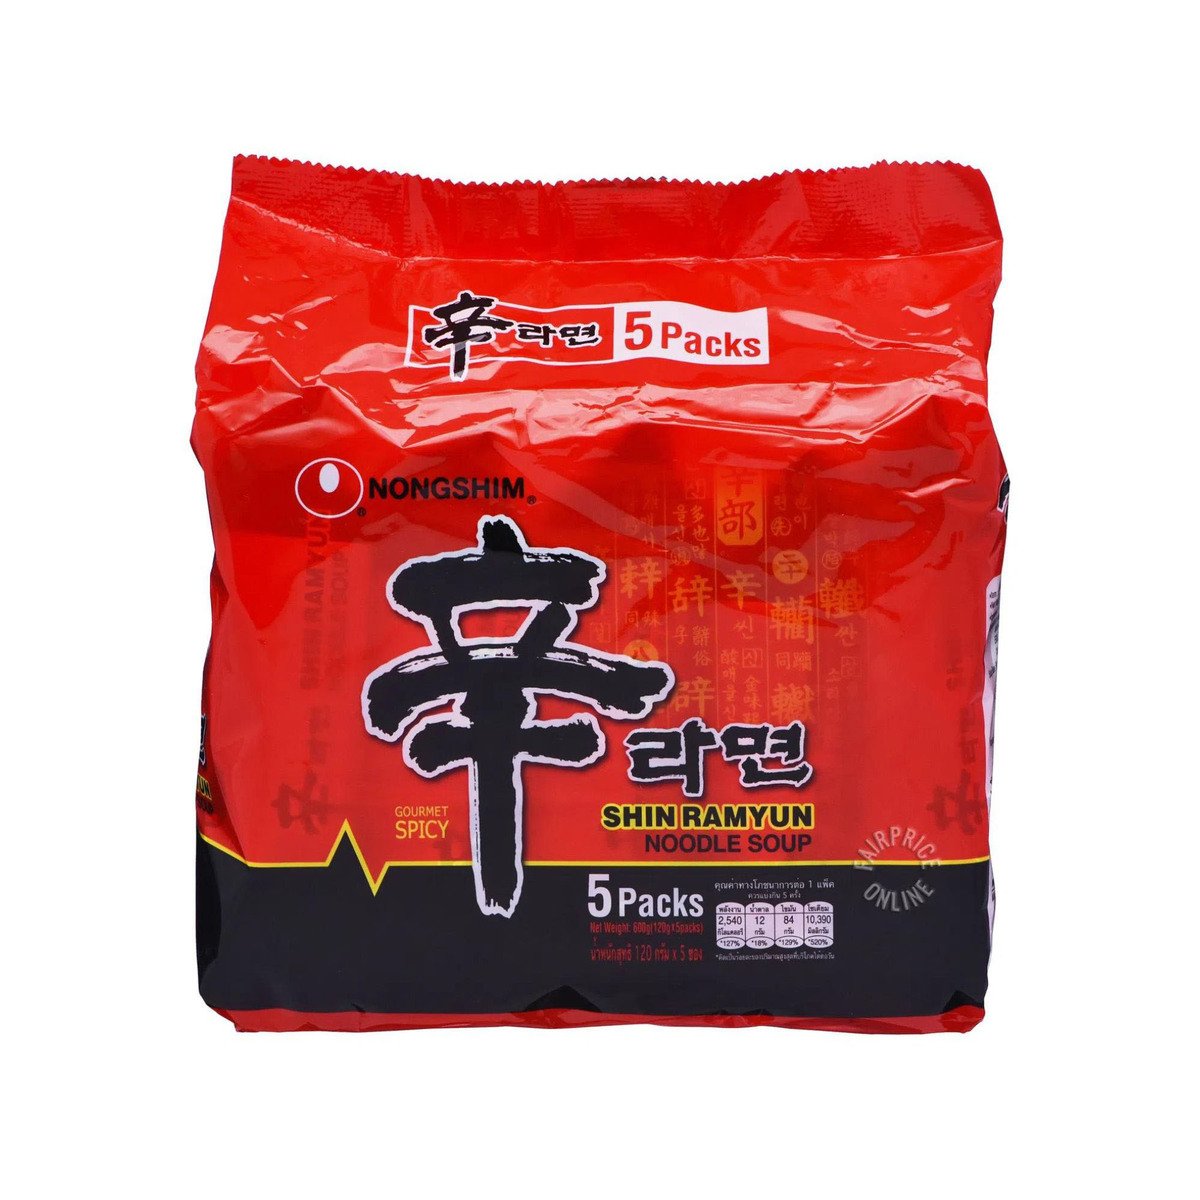 Nongshim Shin Ramyun Noodle Soup 5 x 120 g